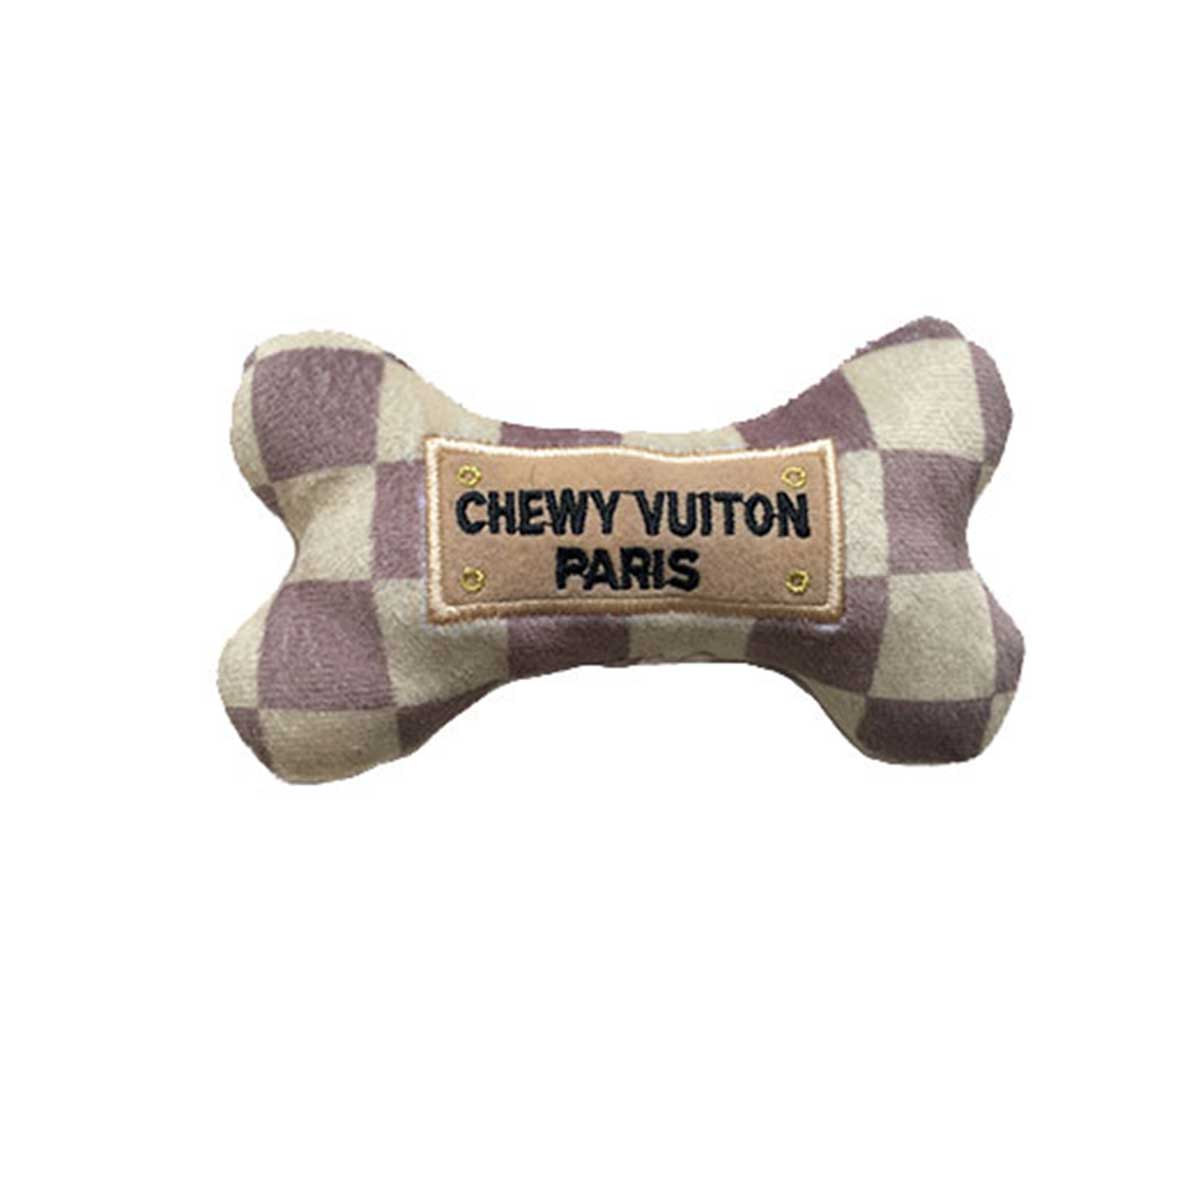 Checker Chewy Vuiton Bone Dog Toy